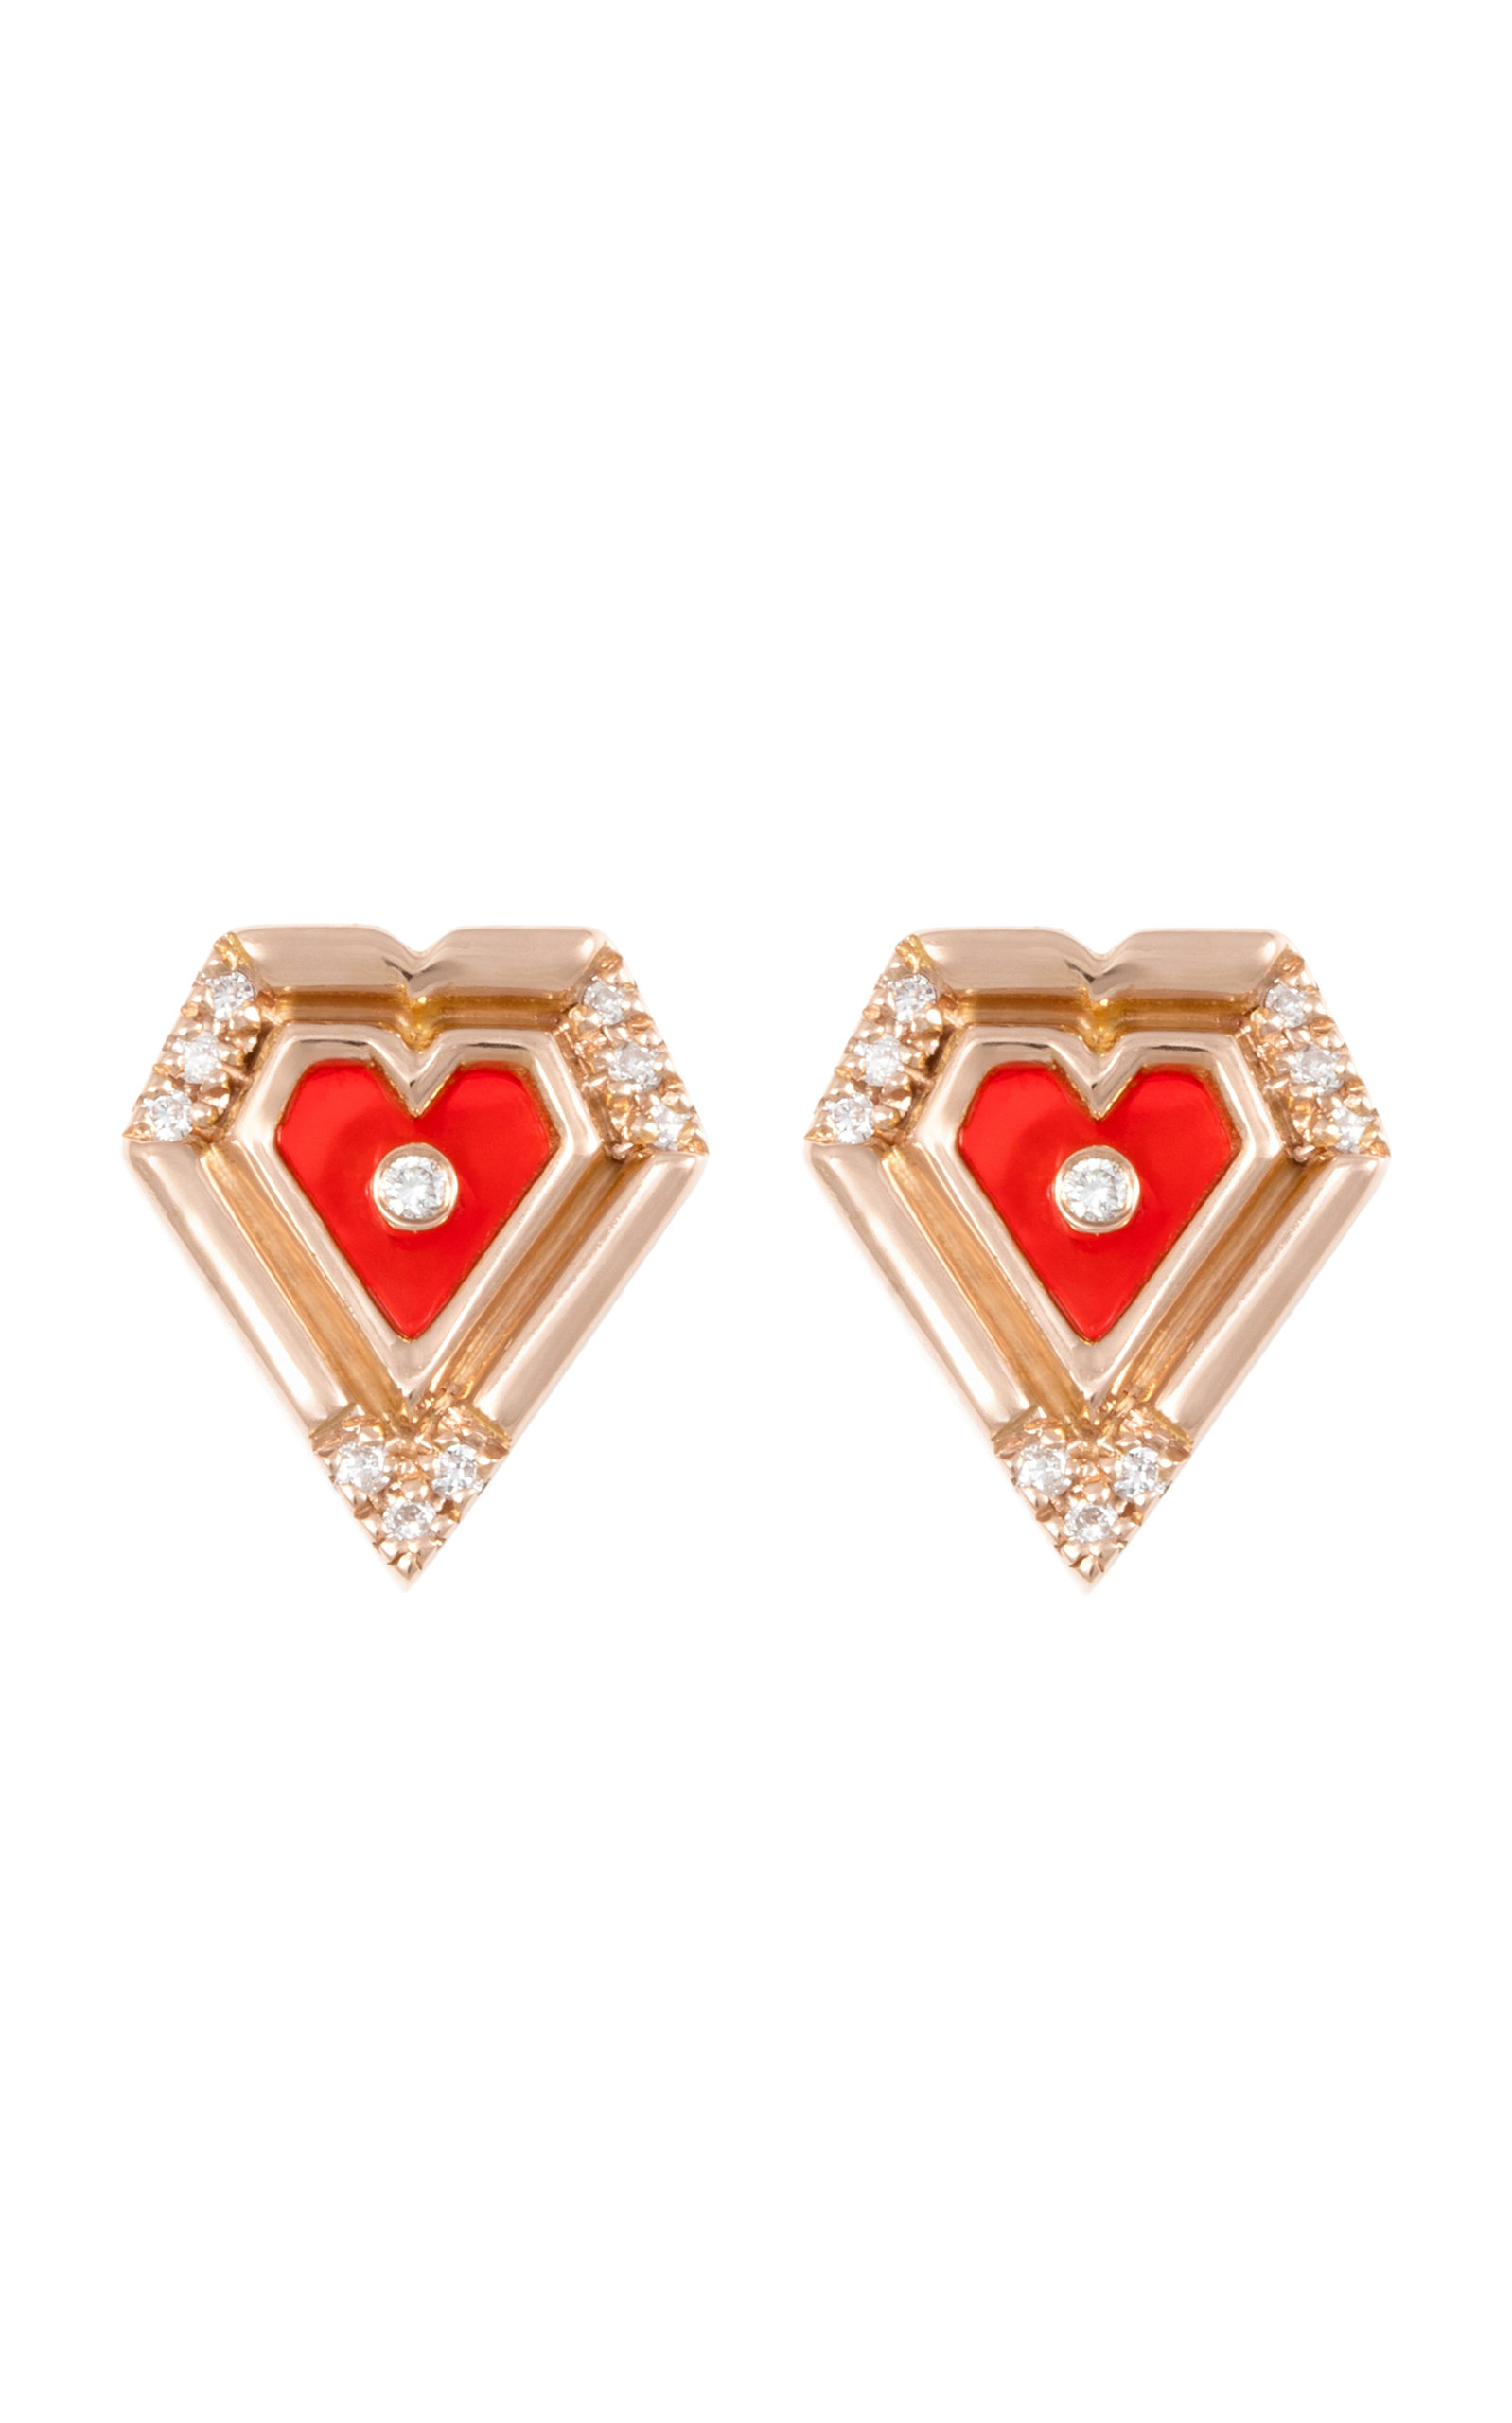 L'Atelier Nawbar Women's Mini Heart 18K Rose Gold Agate Diamond Earrings